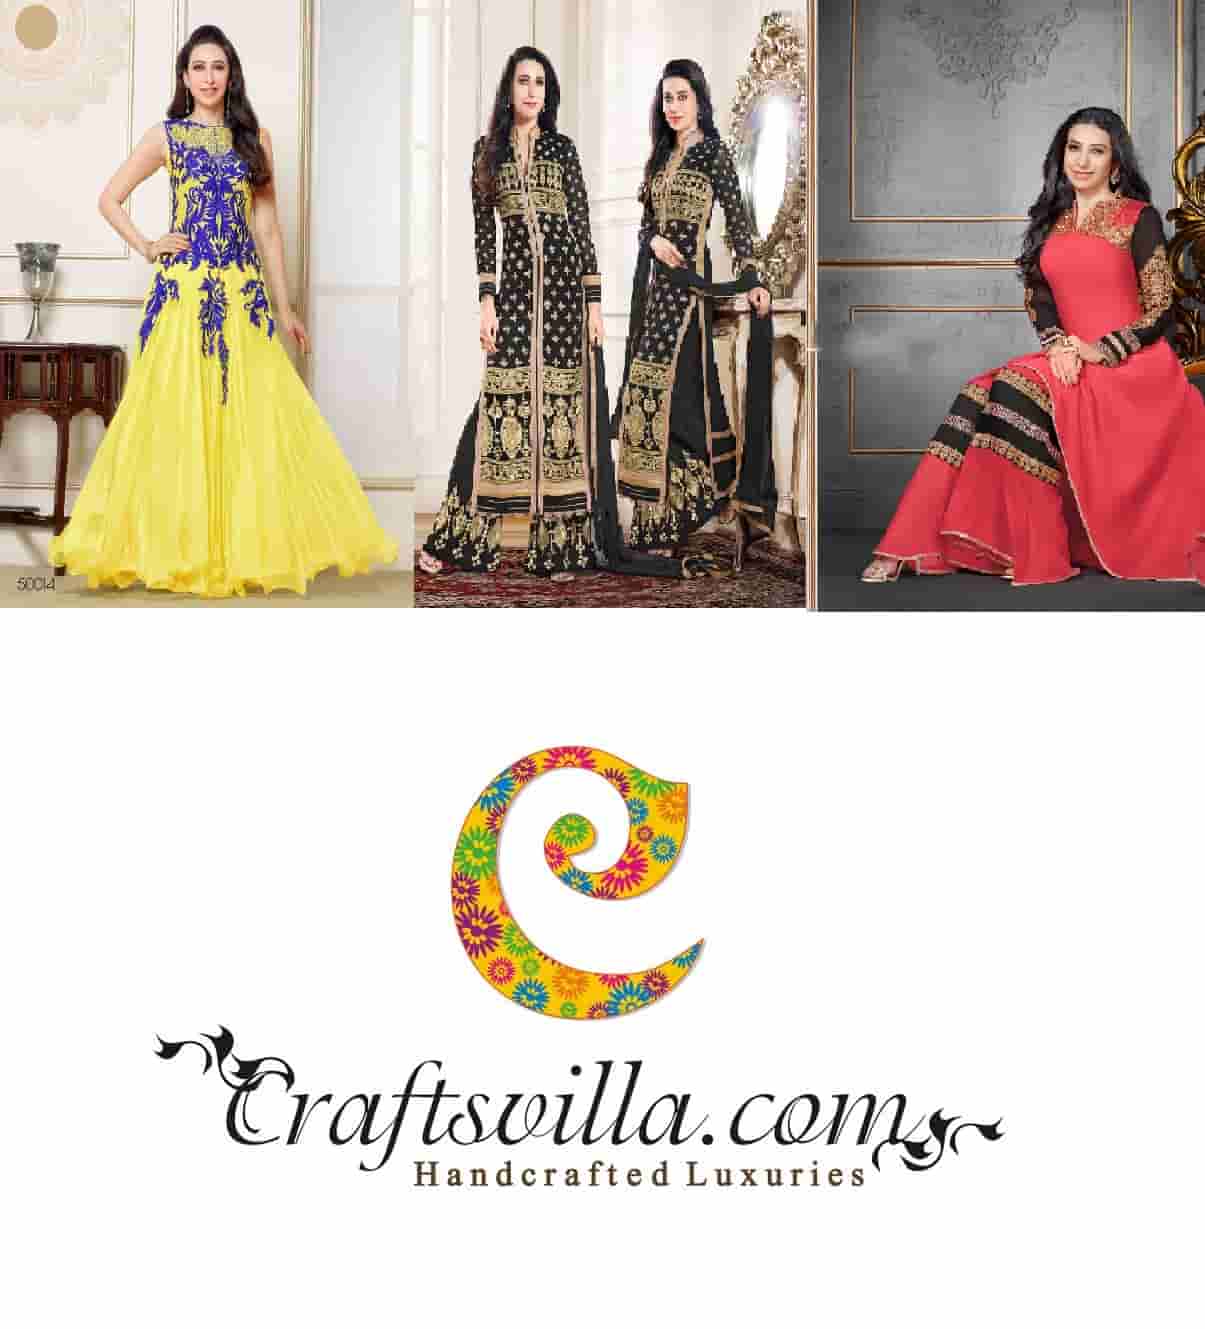 Craftsvillas Avanya womens ethnic wear brand  Estrade  India Business  News Financial News Indian Stock Market SENSEX NIFTY IPOs